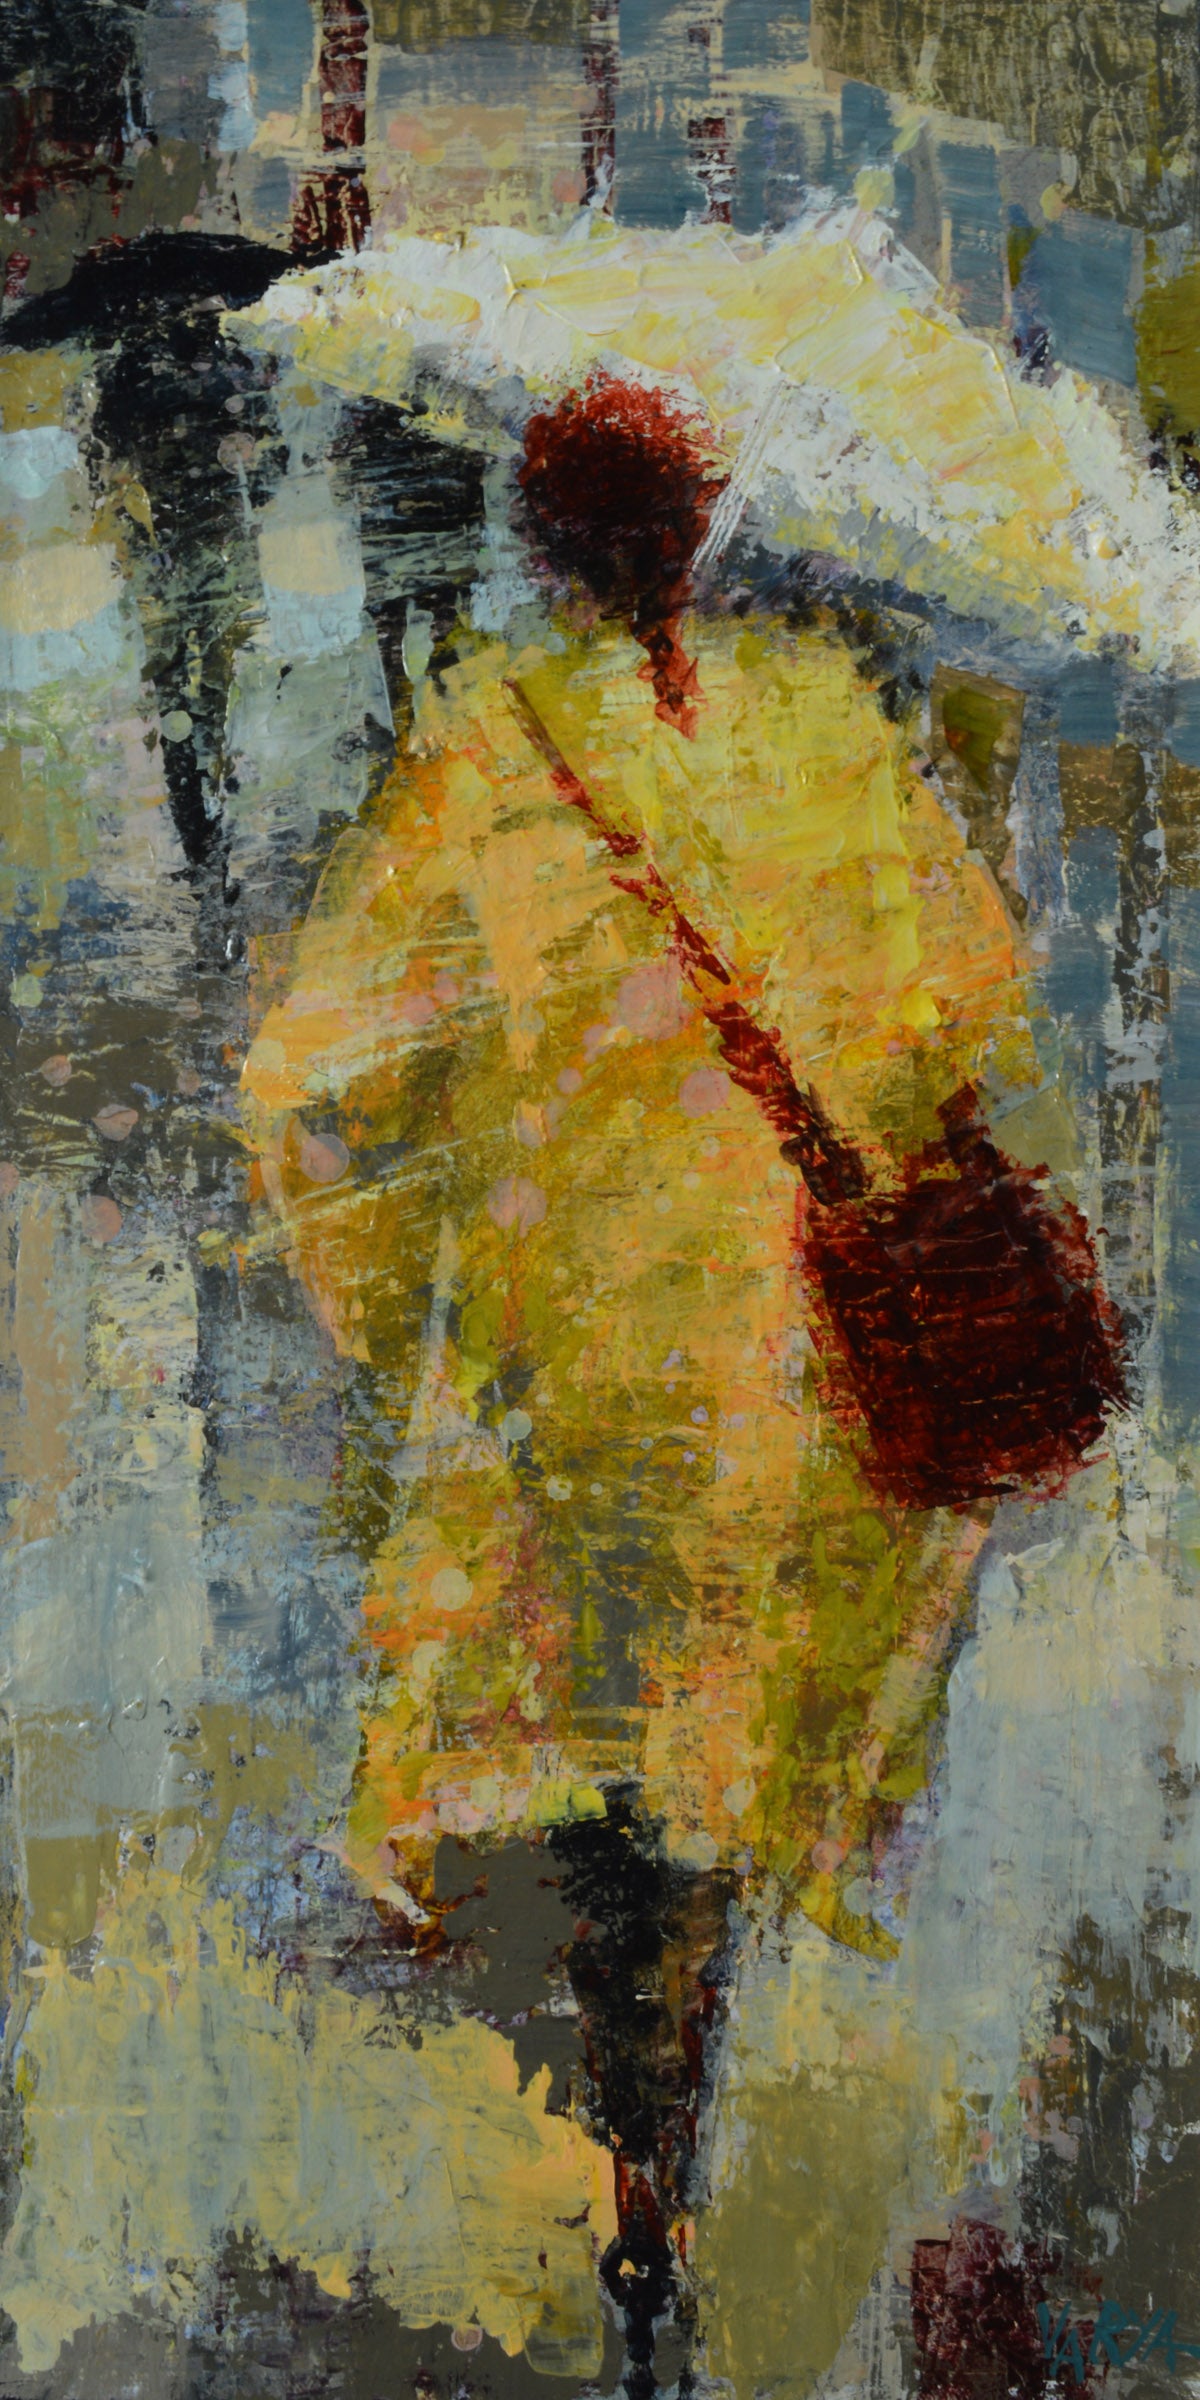 painting of woman on rainy street